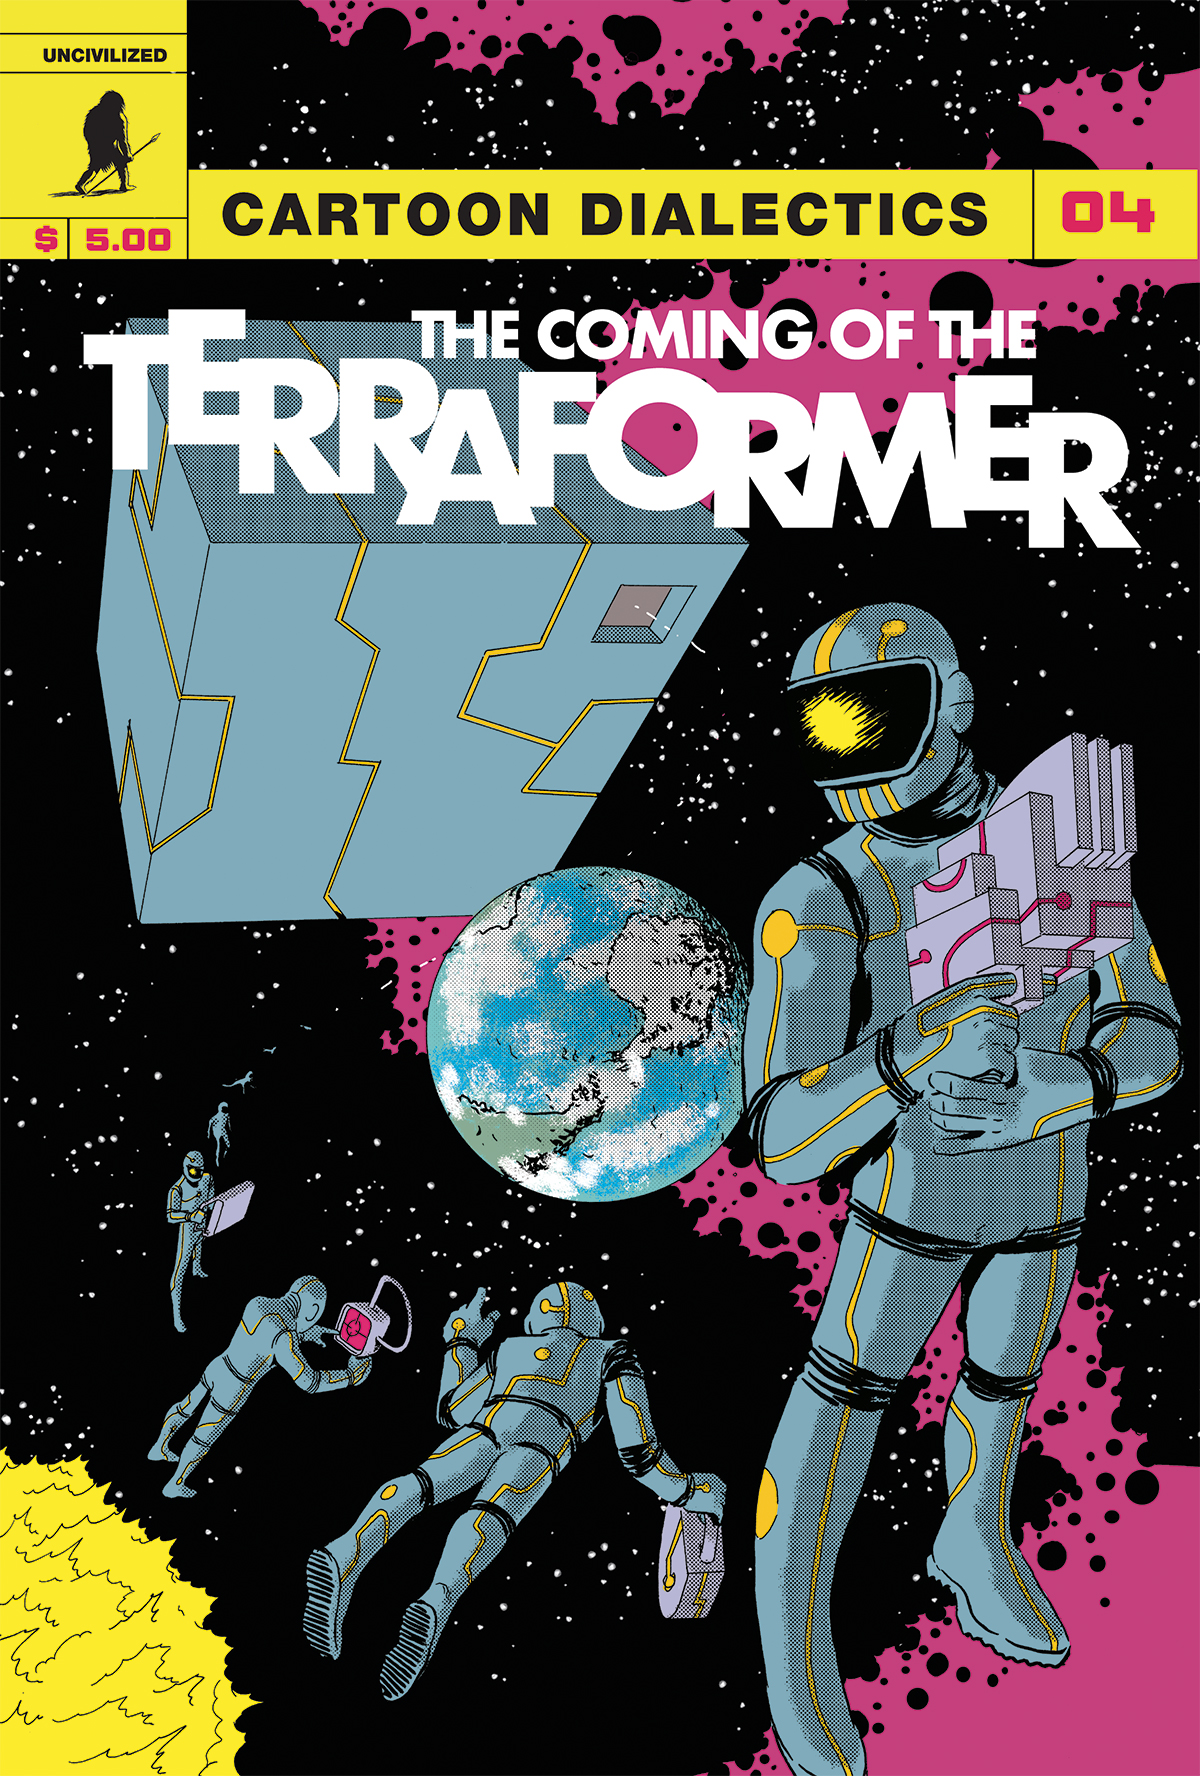 Cartoon Dialectics #4 The Coming of the Terraformer